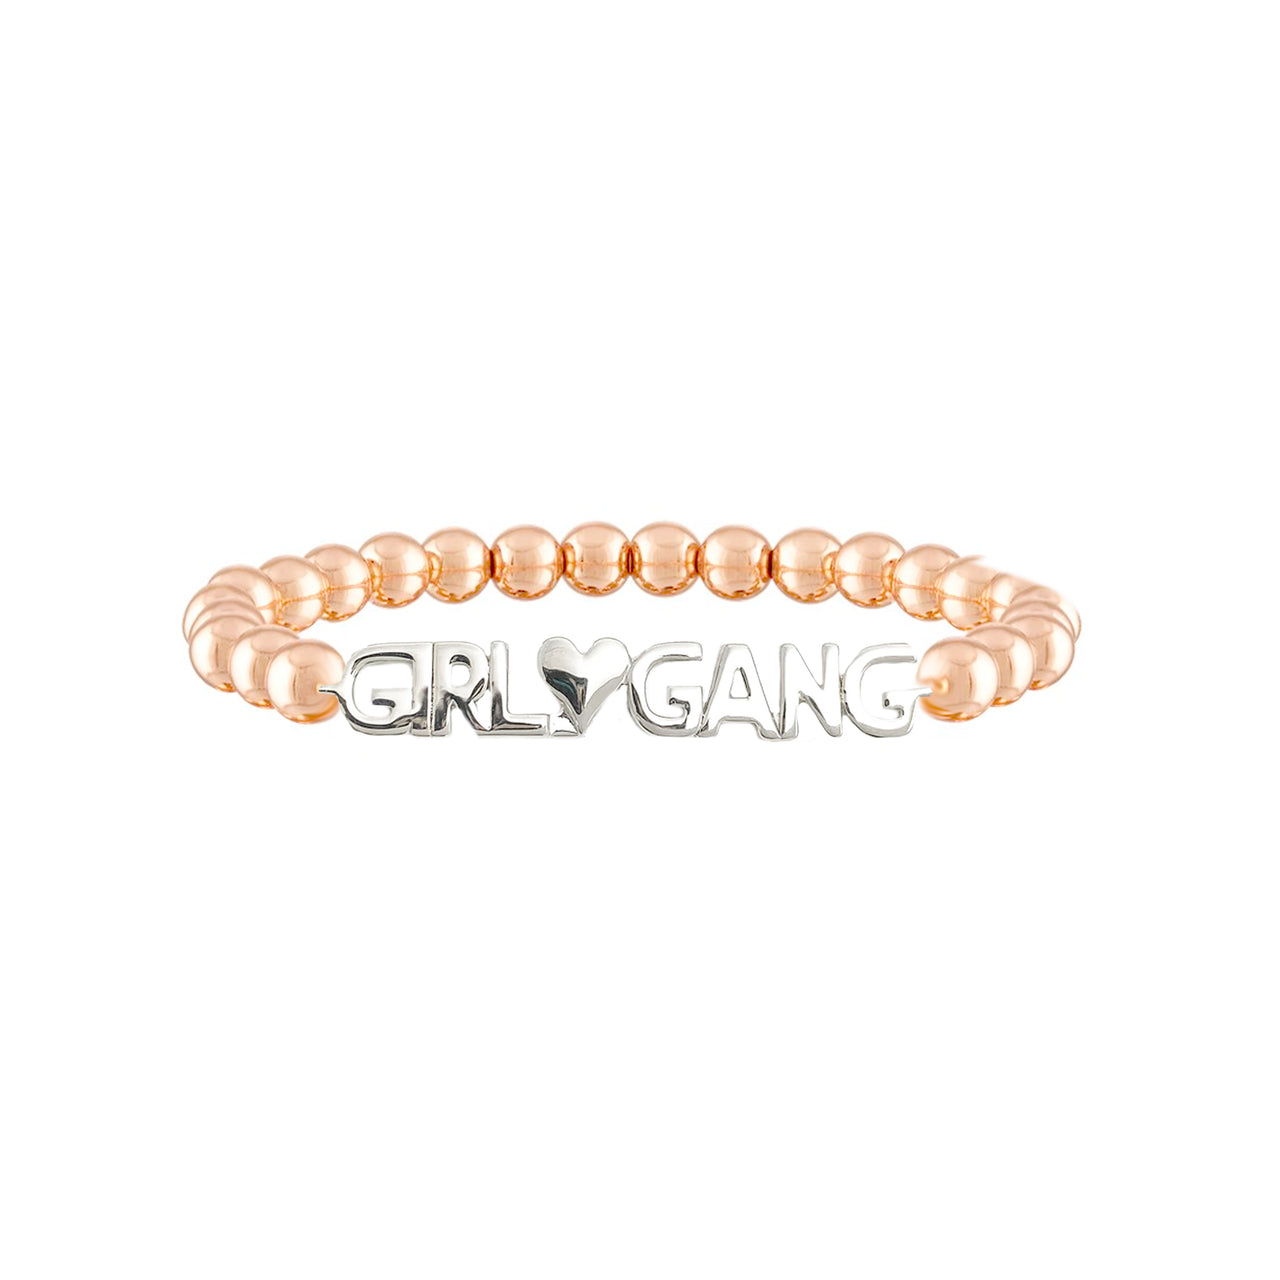 Tamara Galentine's Day Girl Gang Bracelet